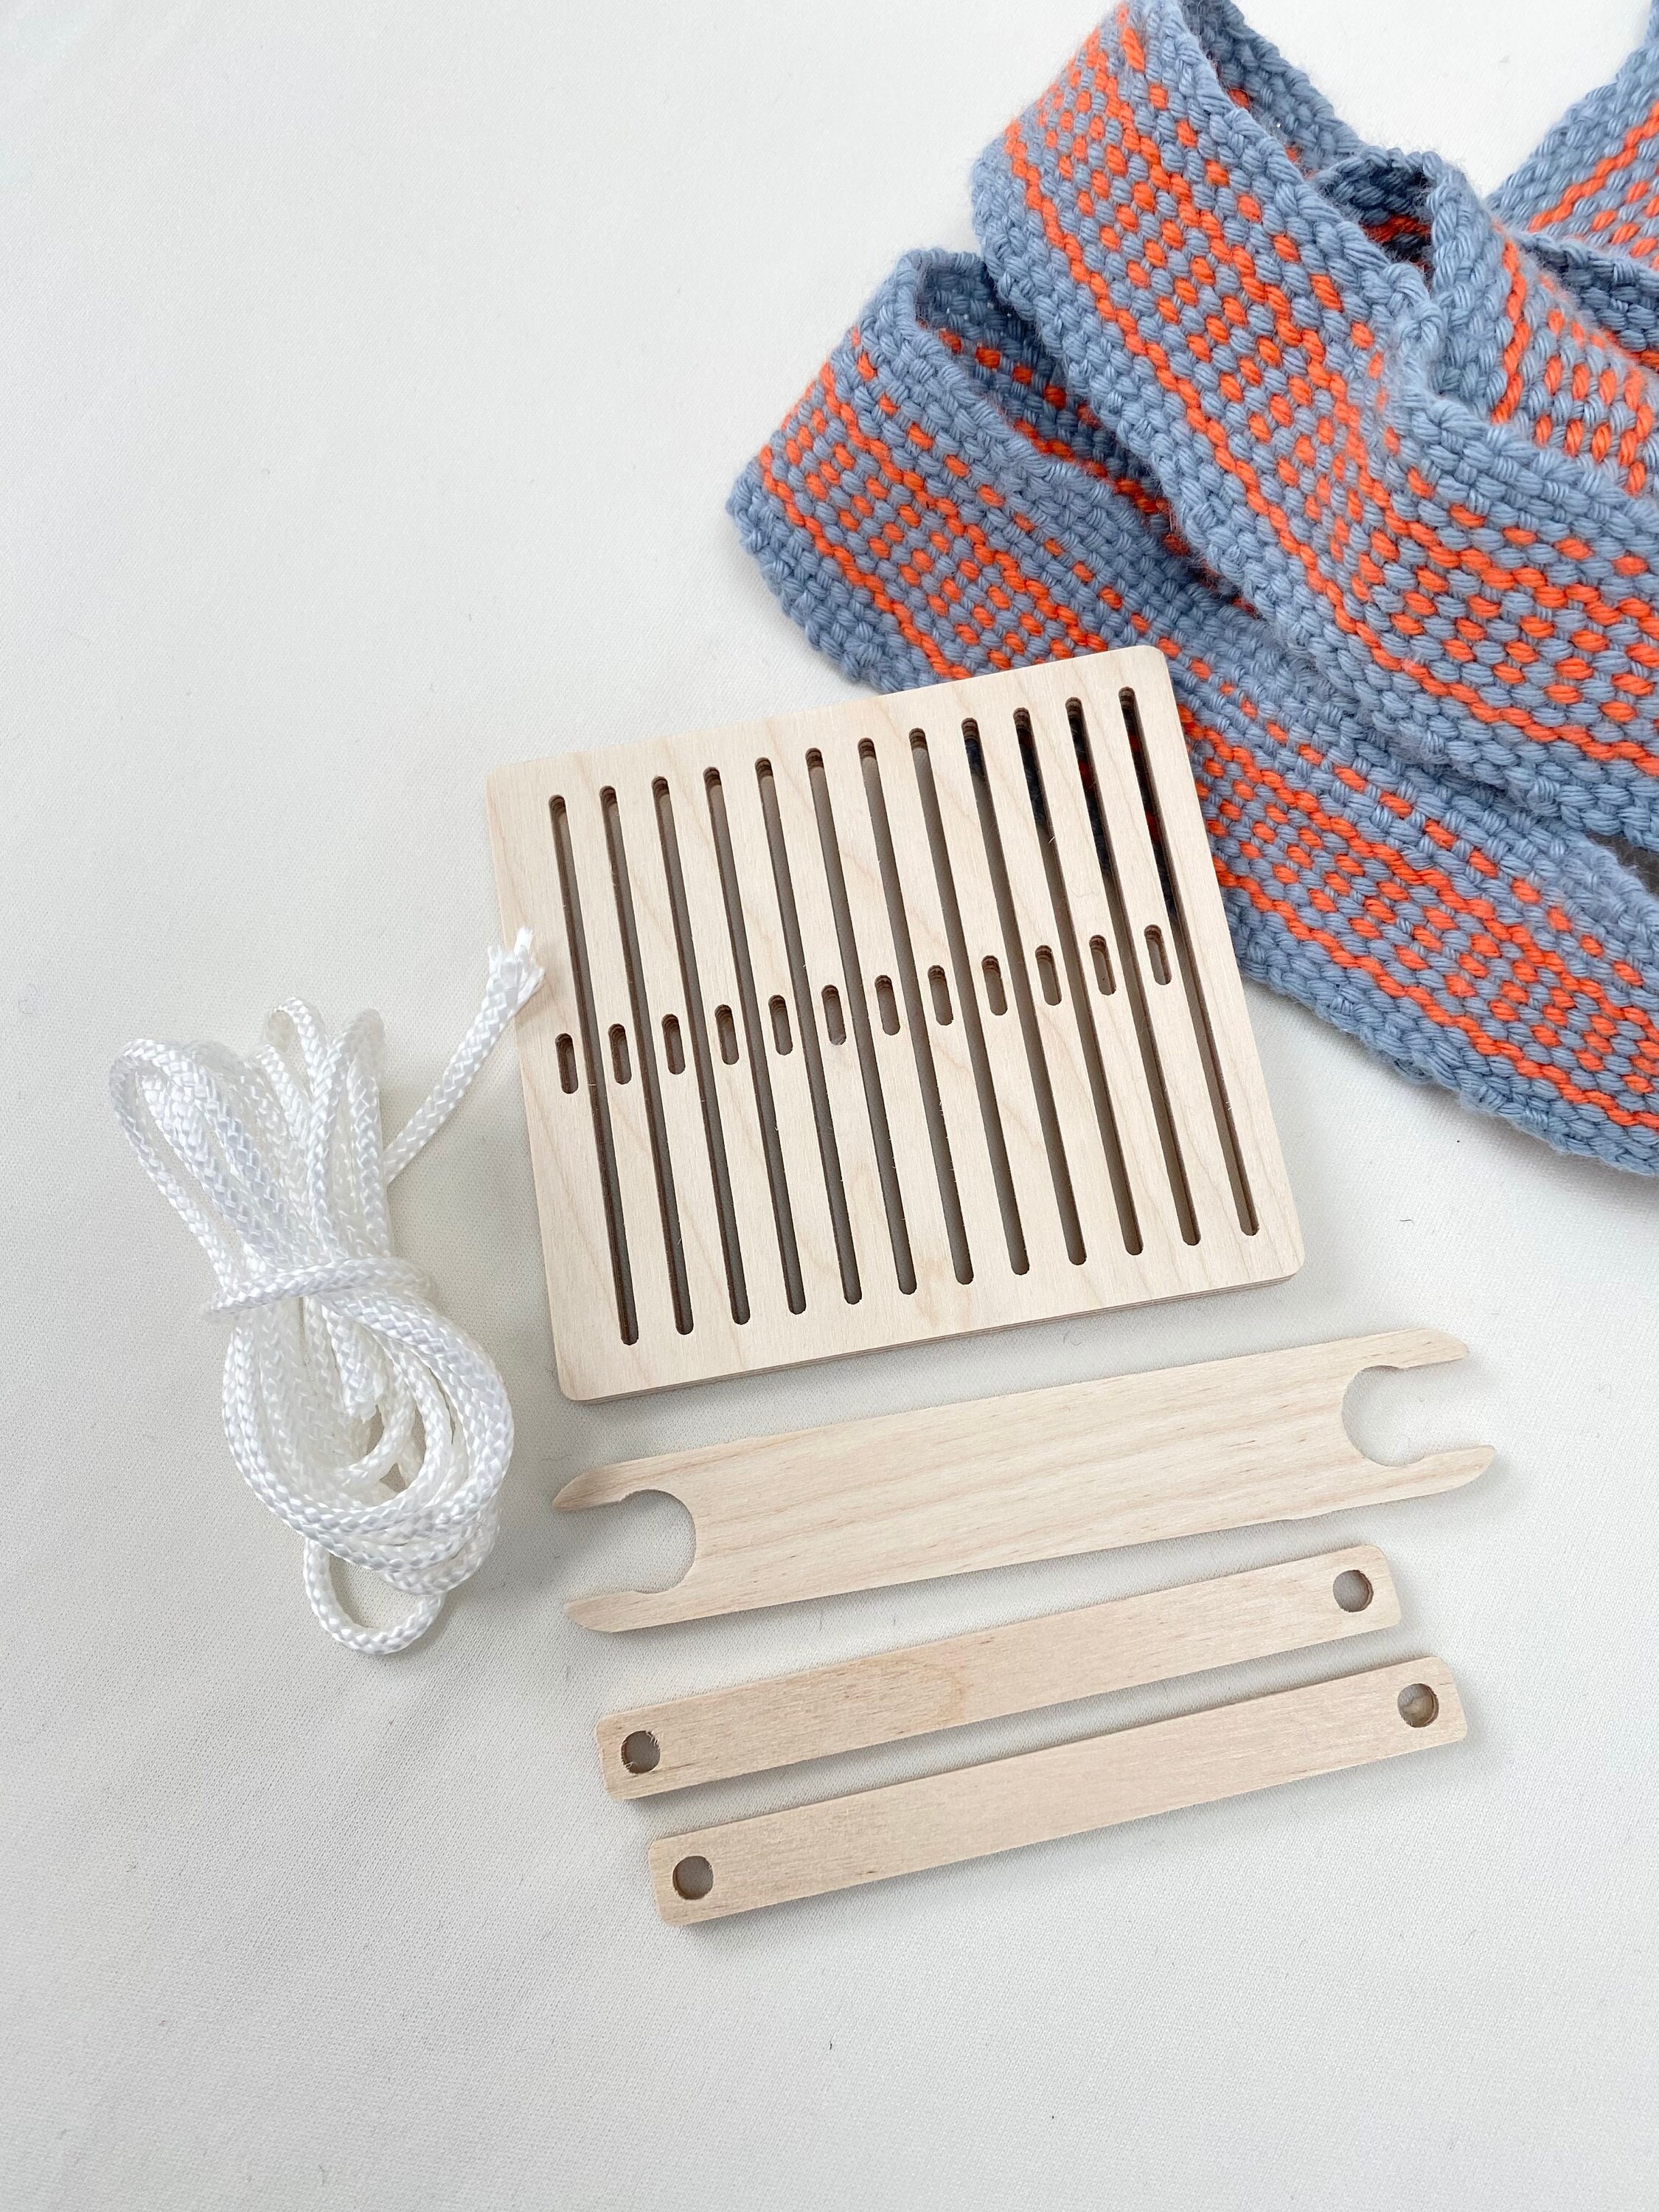 Backstrap Loom Kit by Friendly Loom